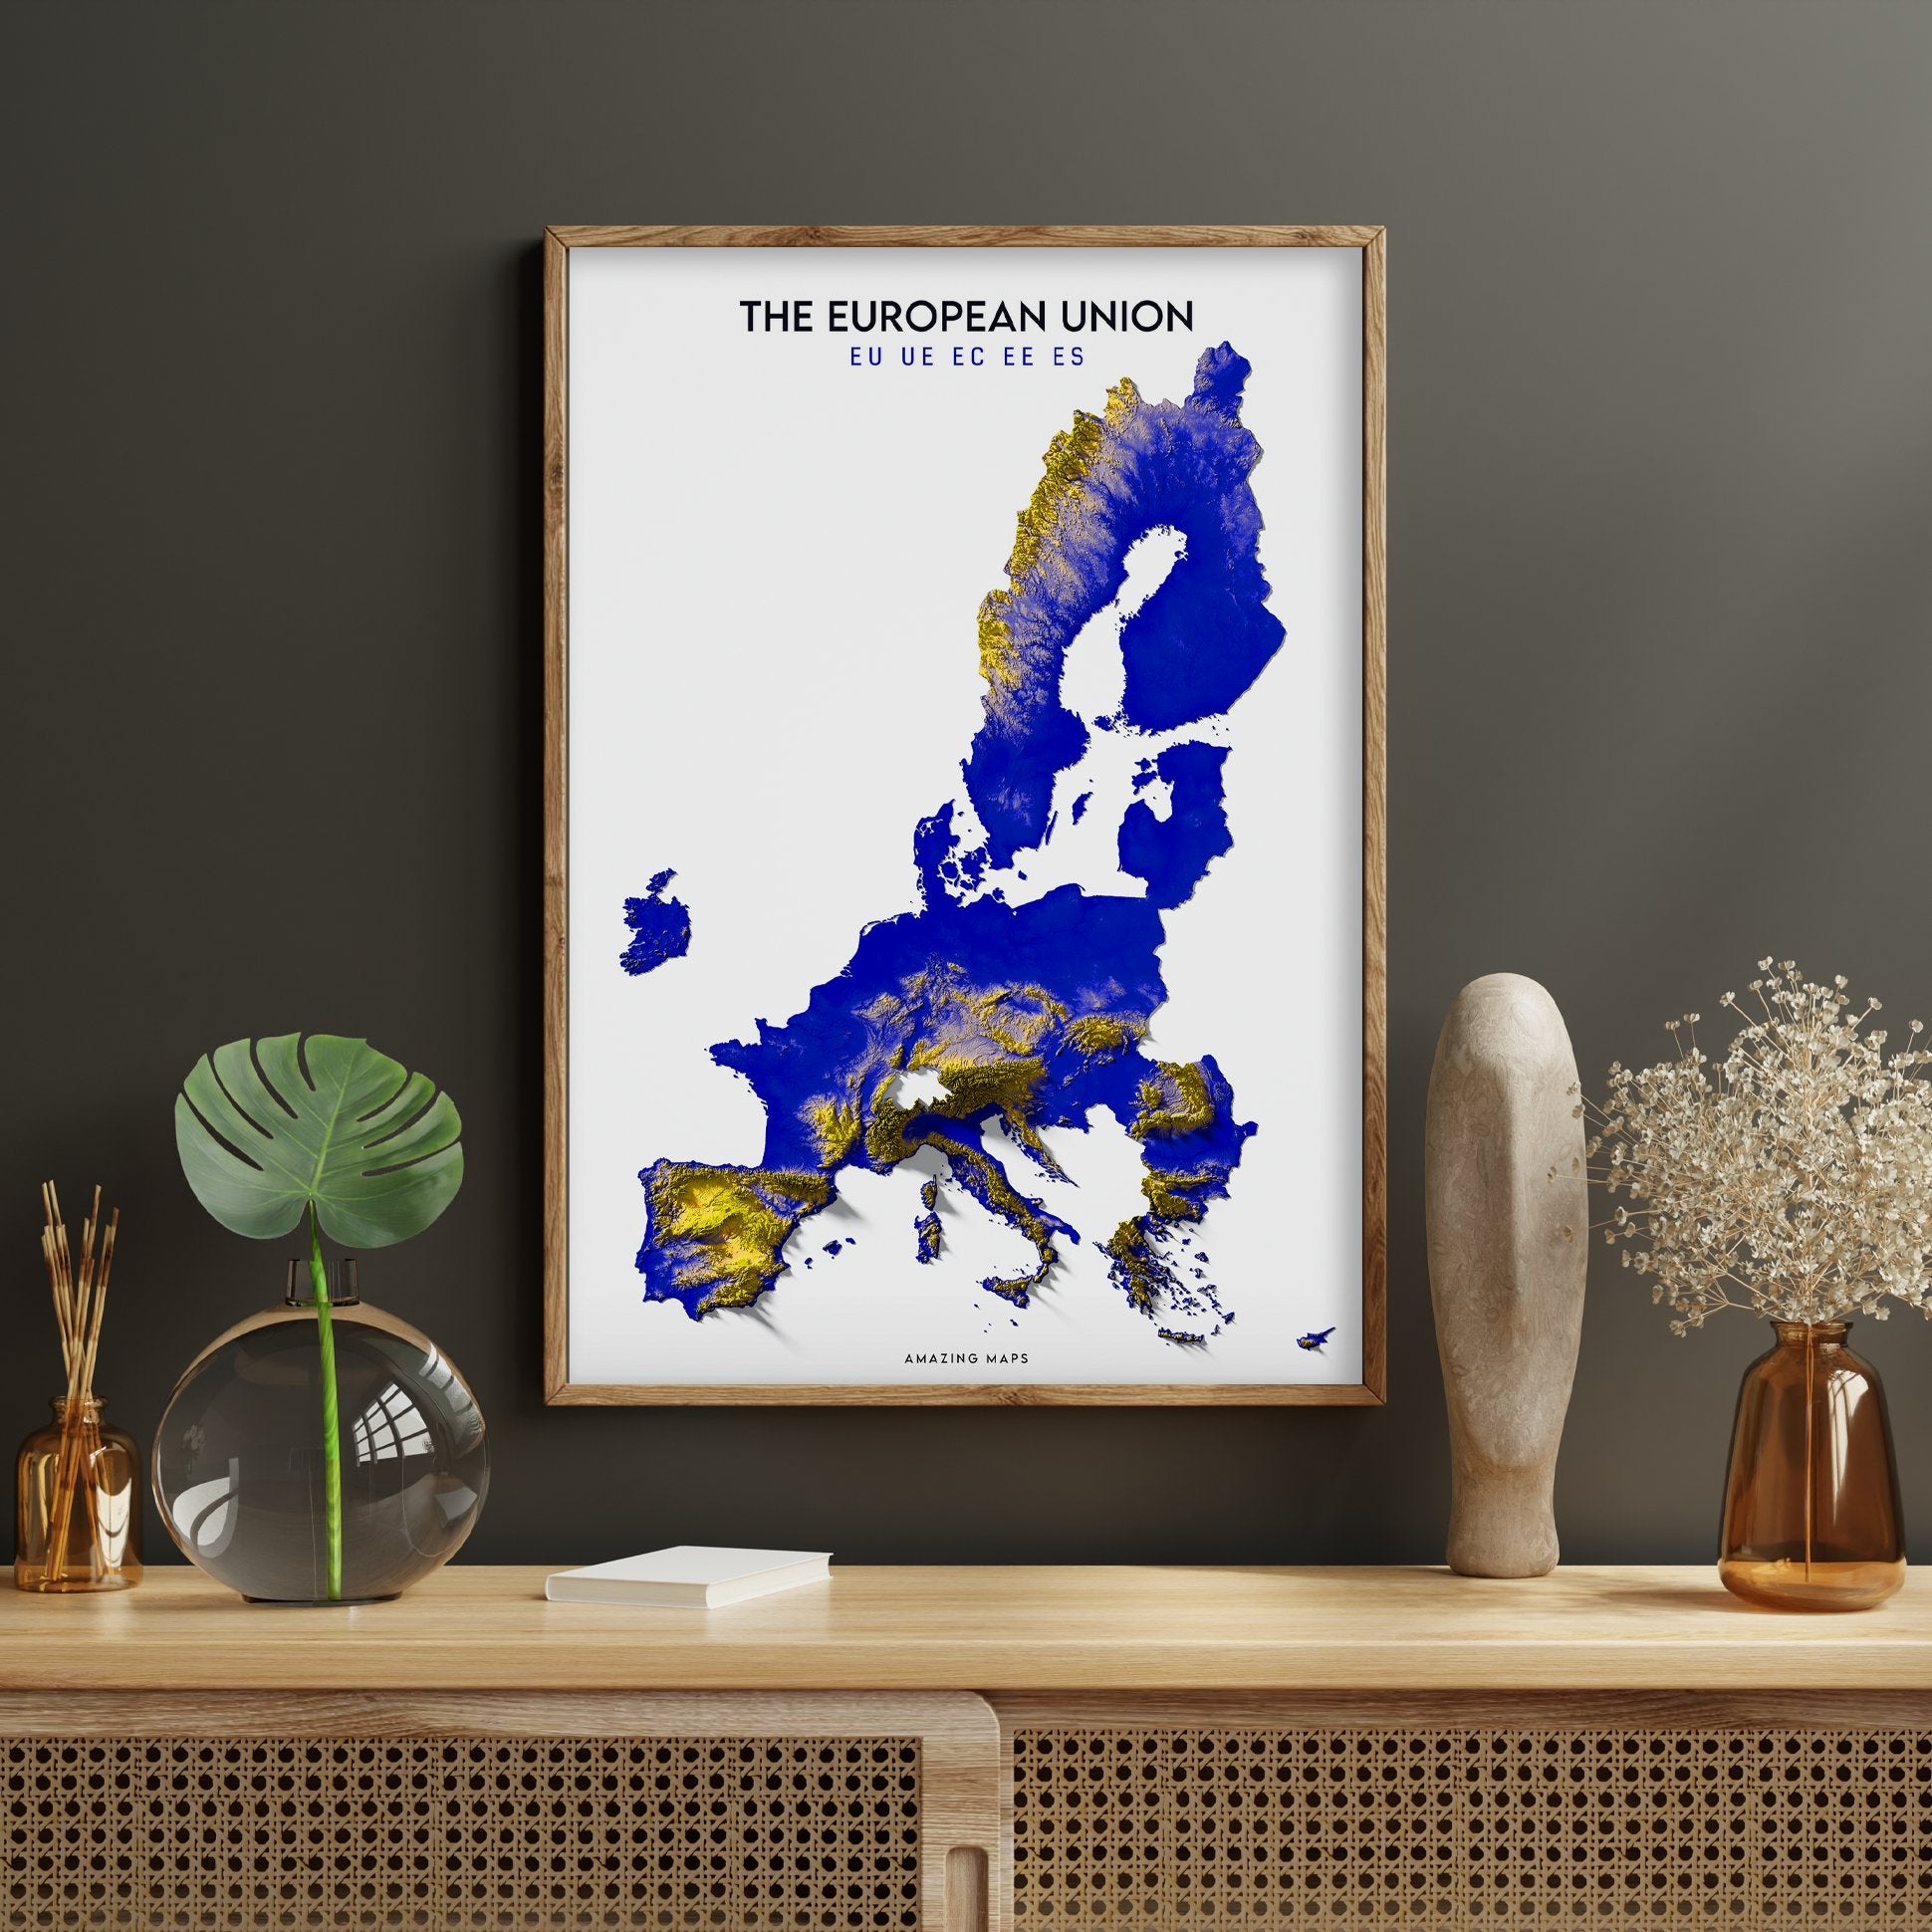 European Union Relief map - Amazing Maps